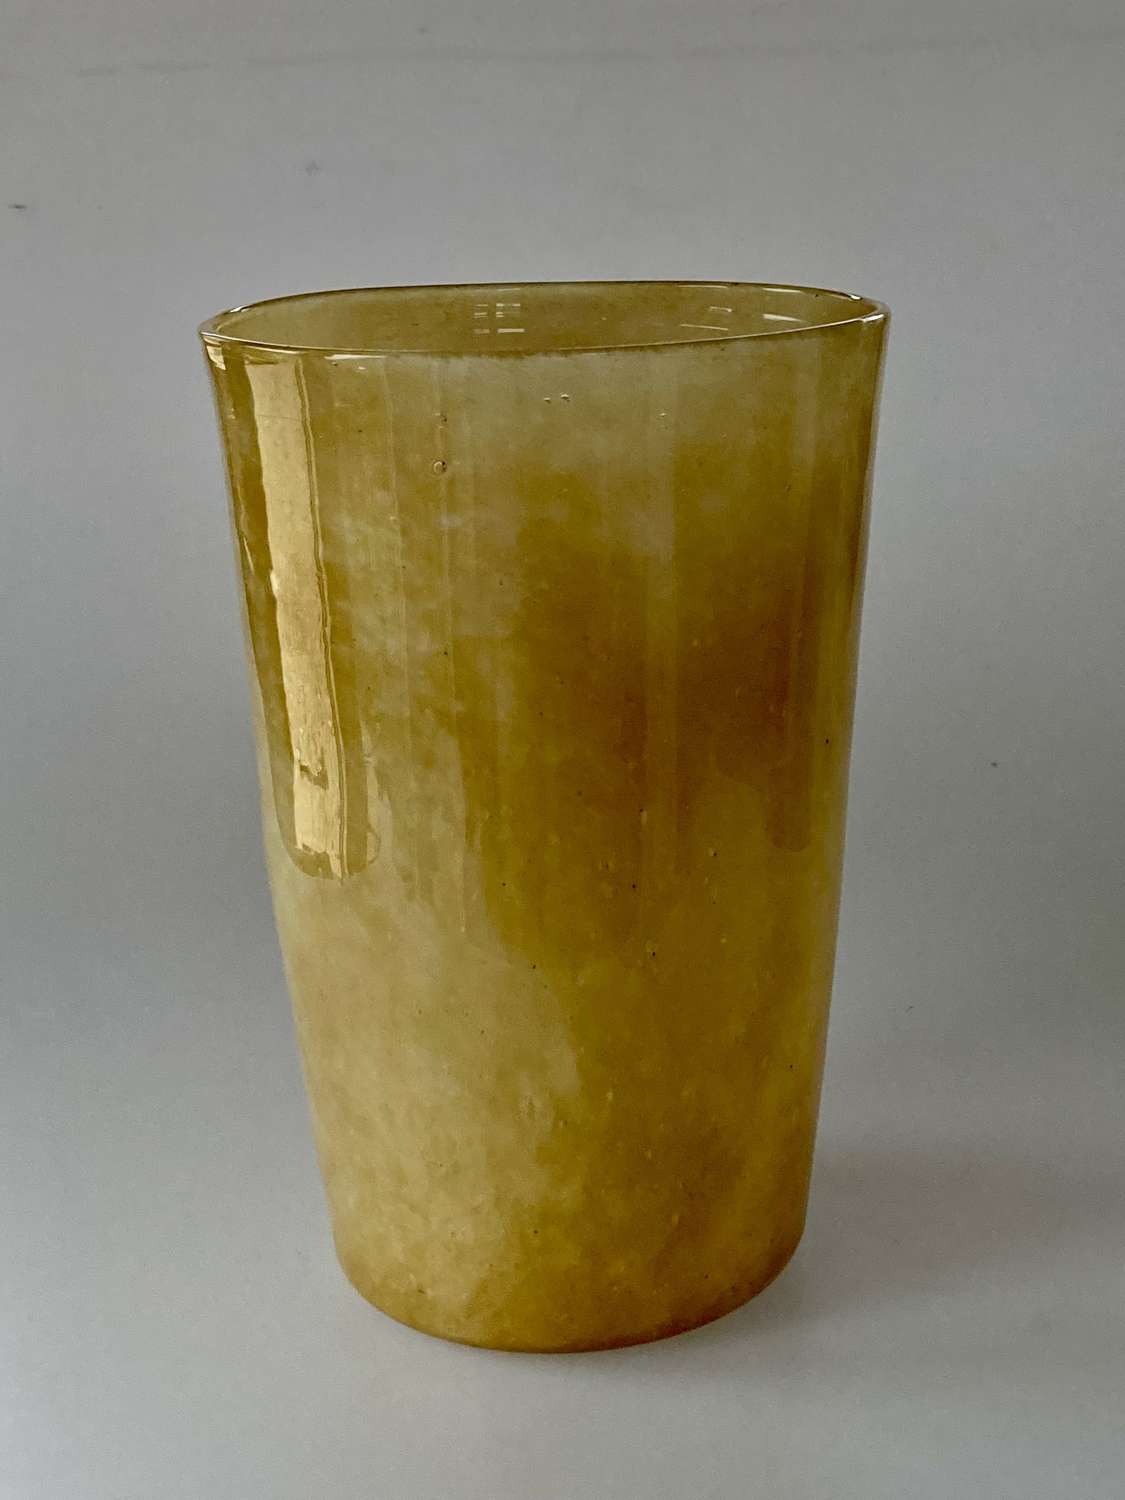 Cloudy yellow tumbler vase